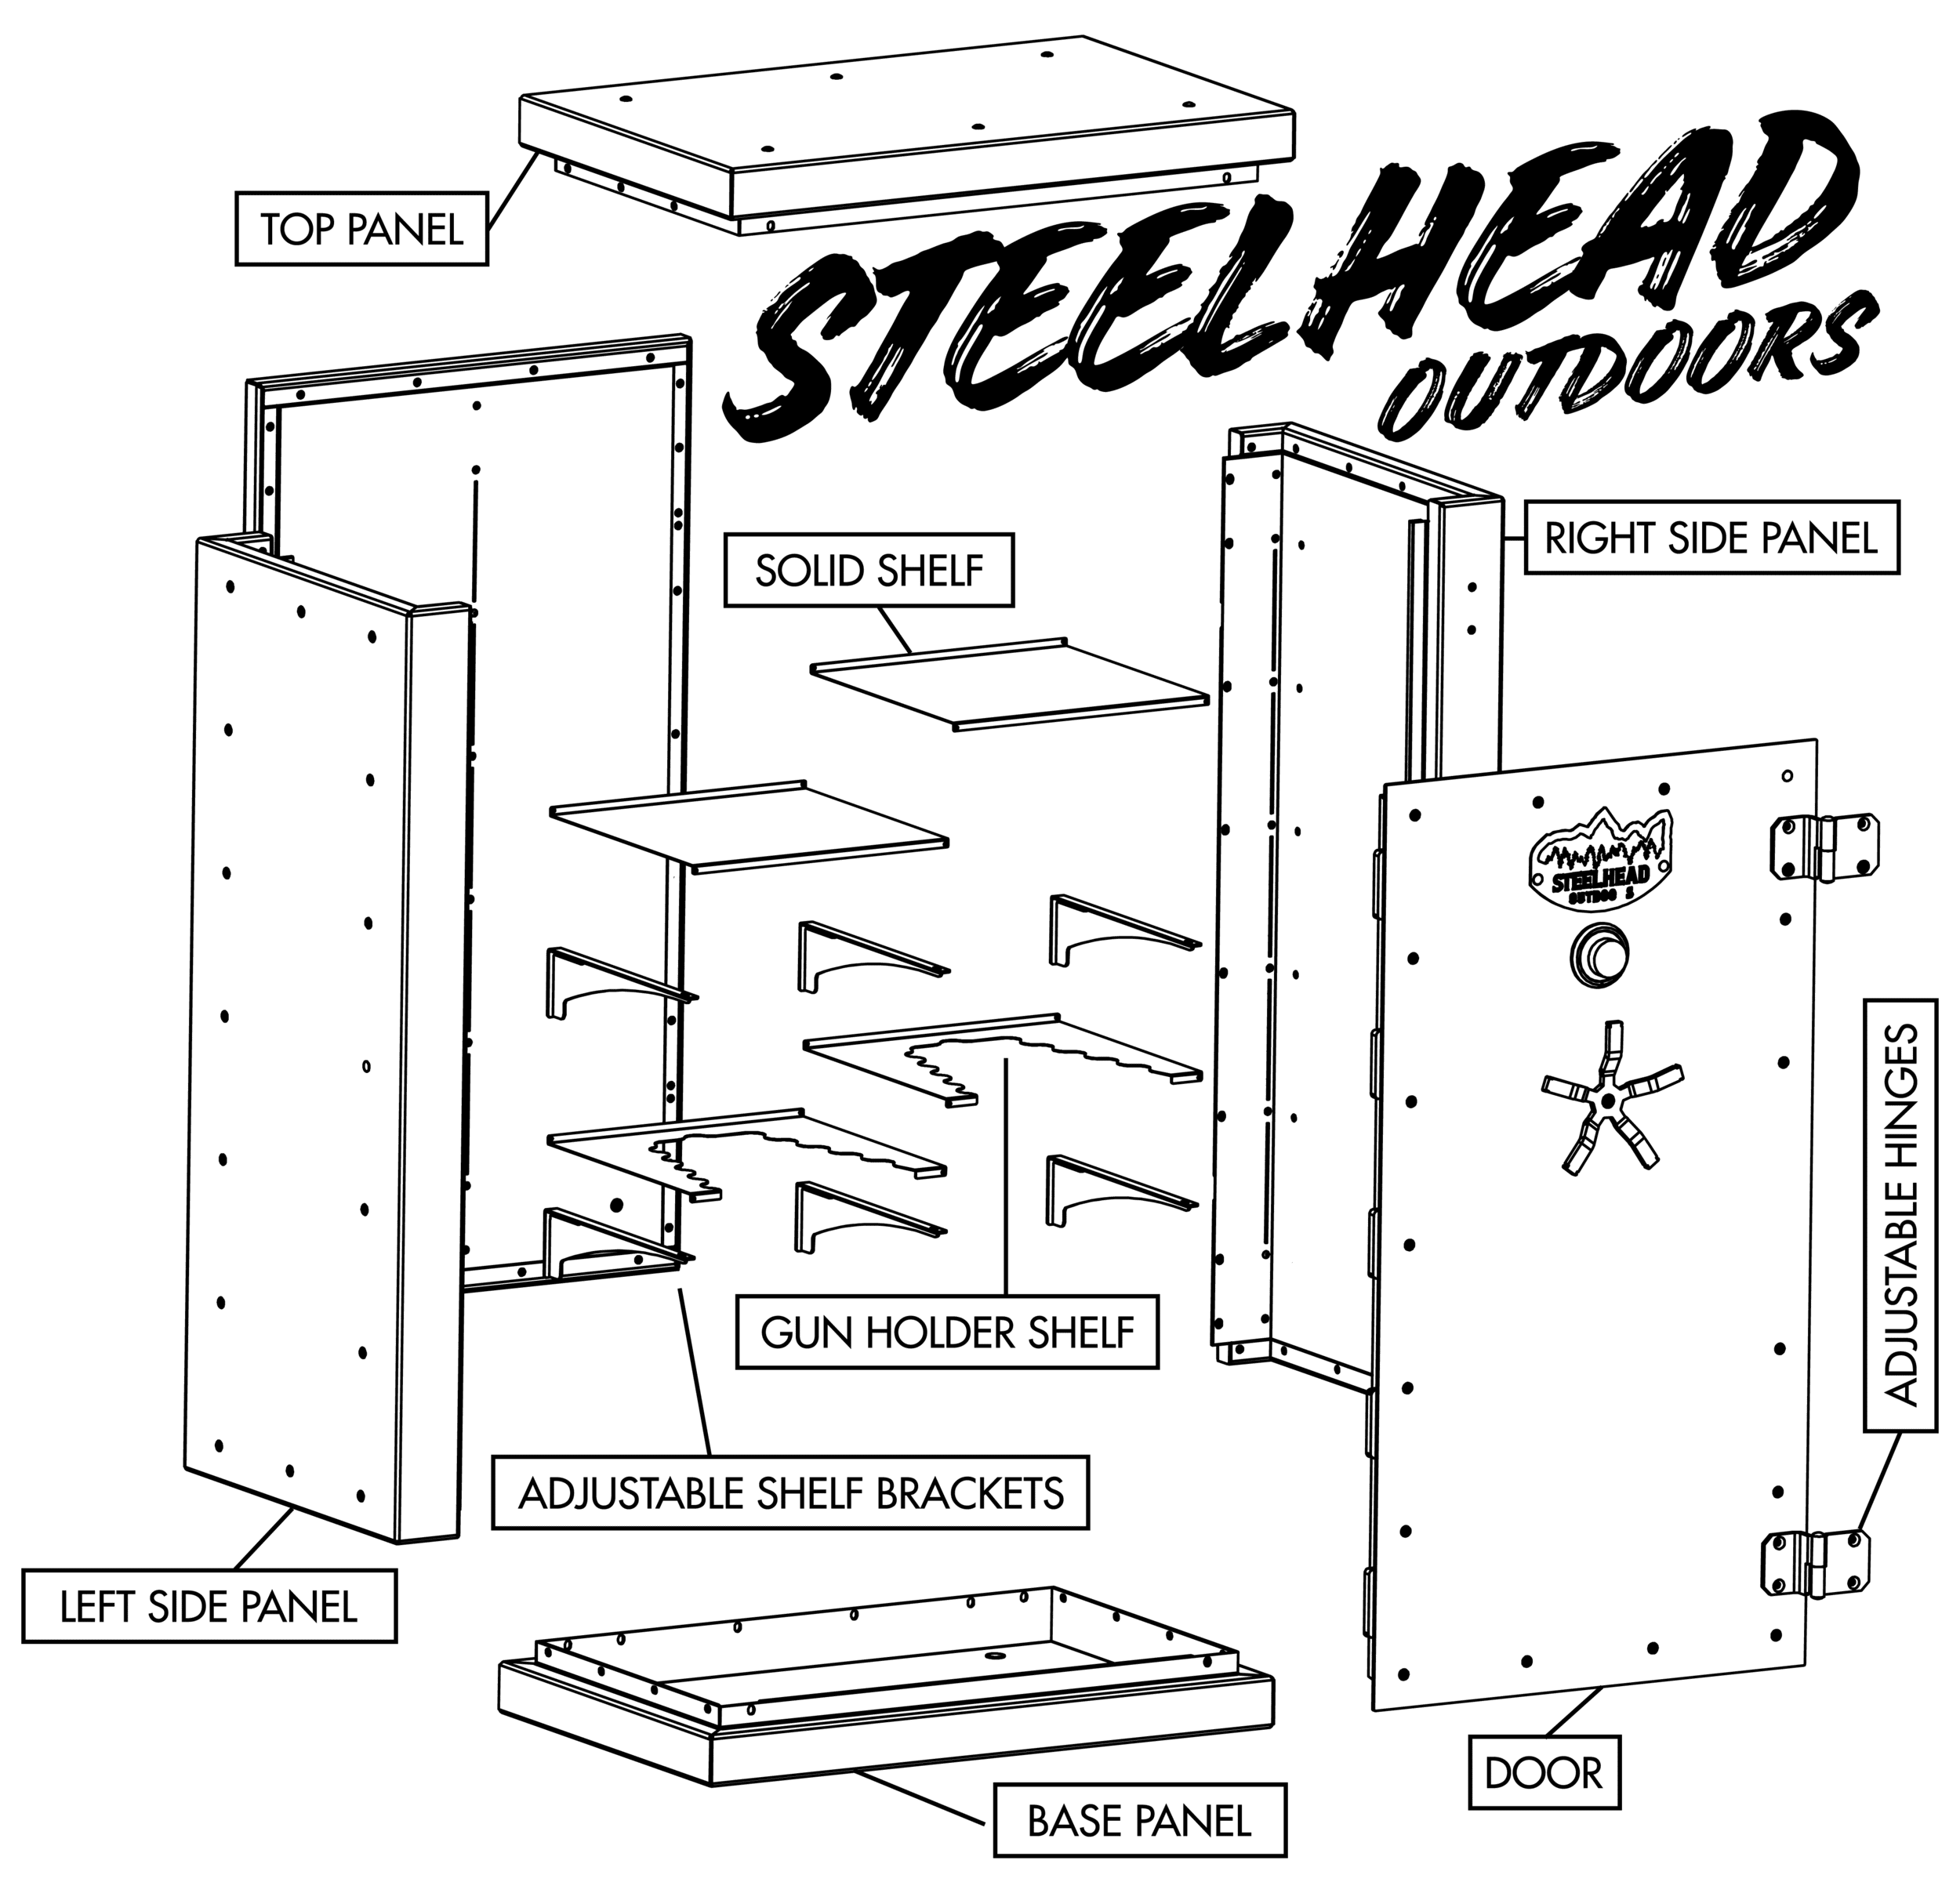 Steelhead Outdoors gun safe diagram with parts